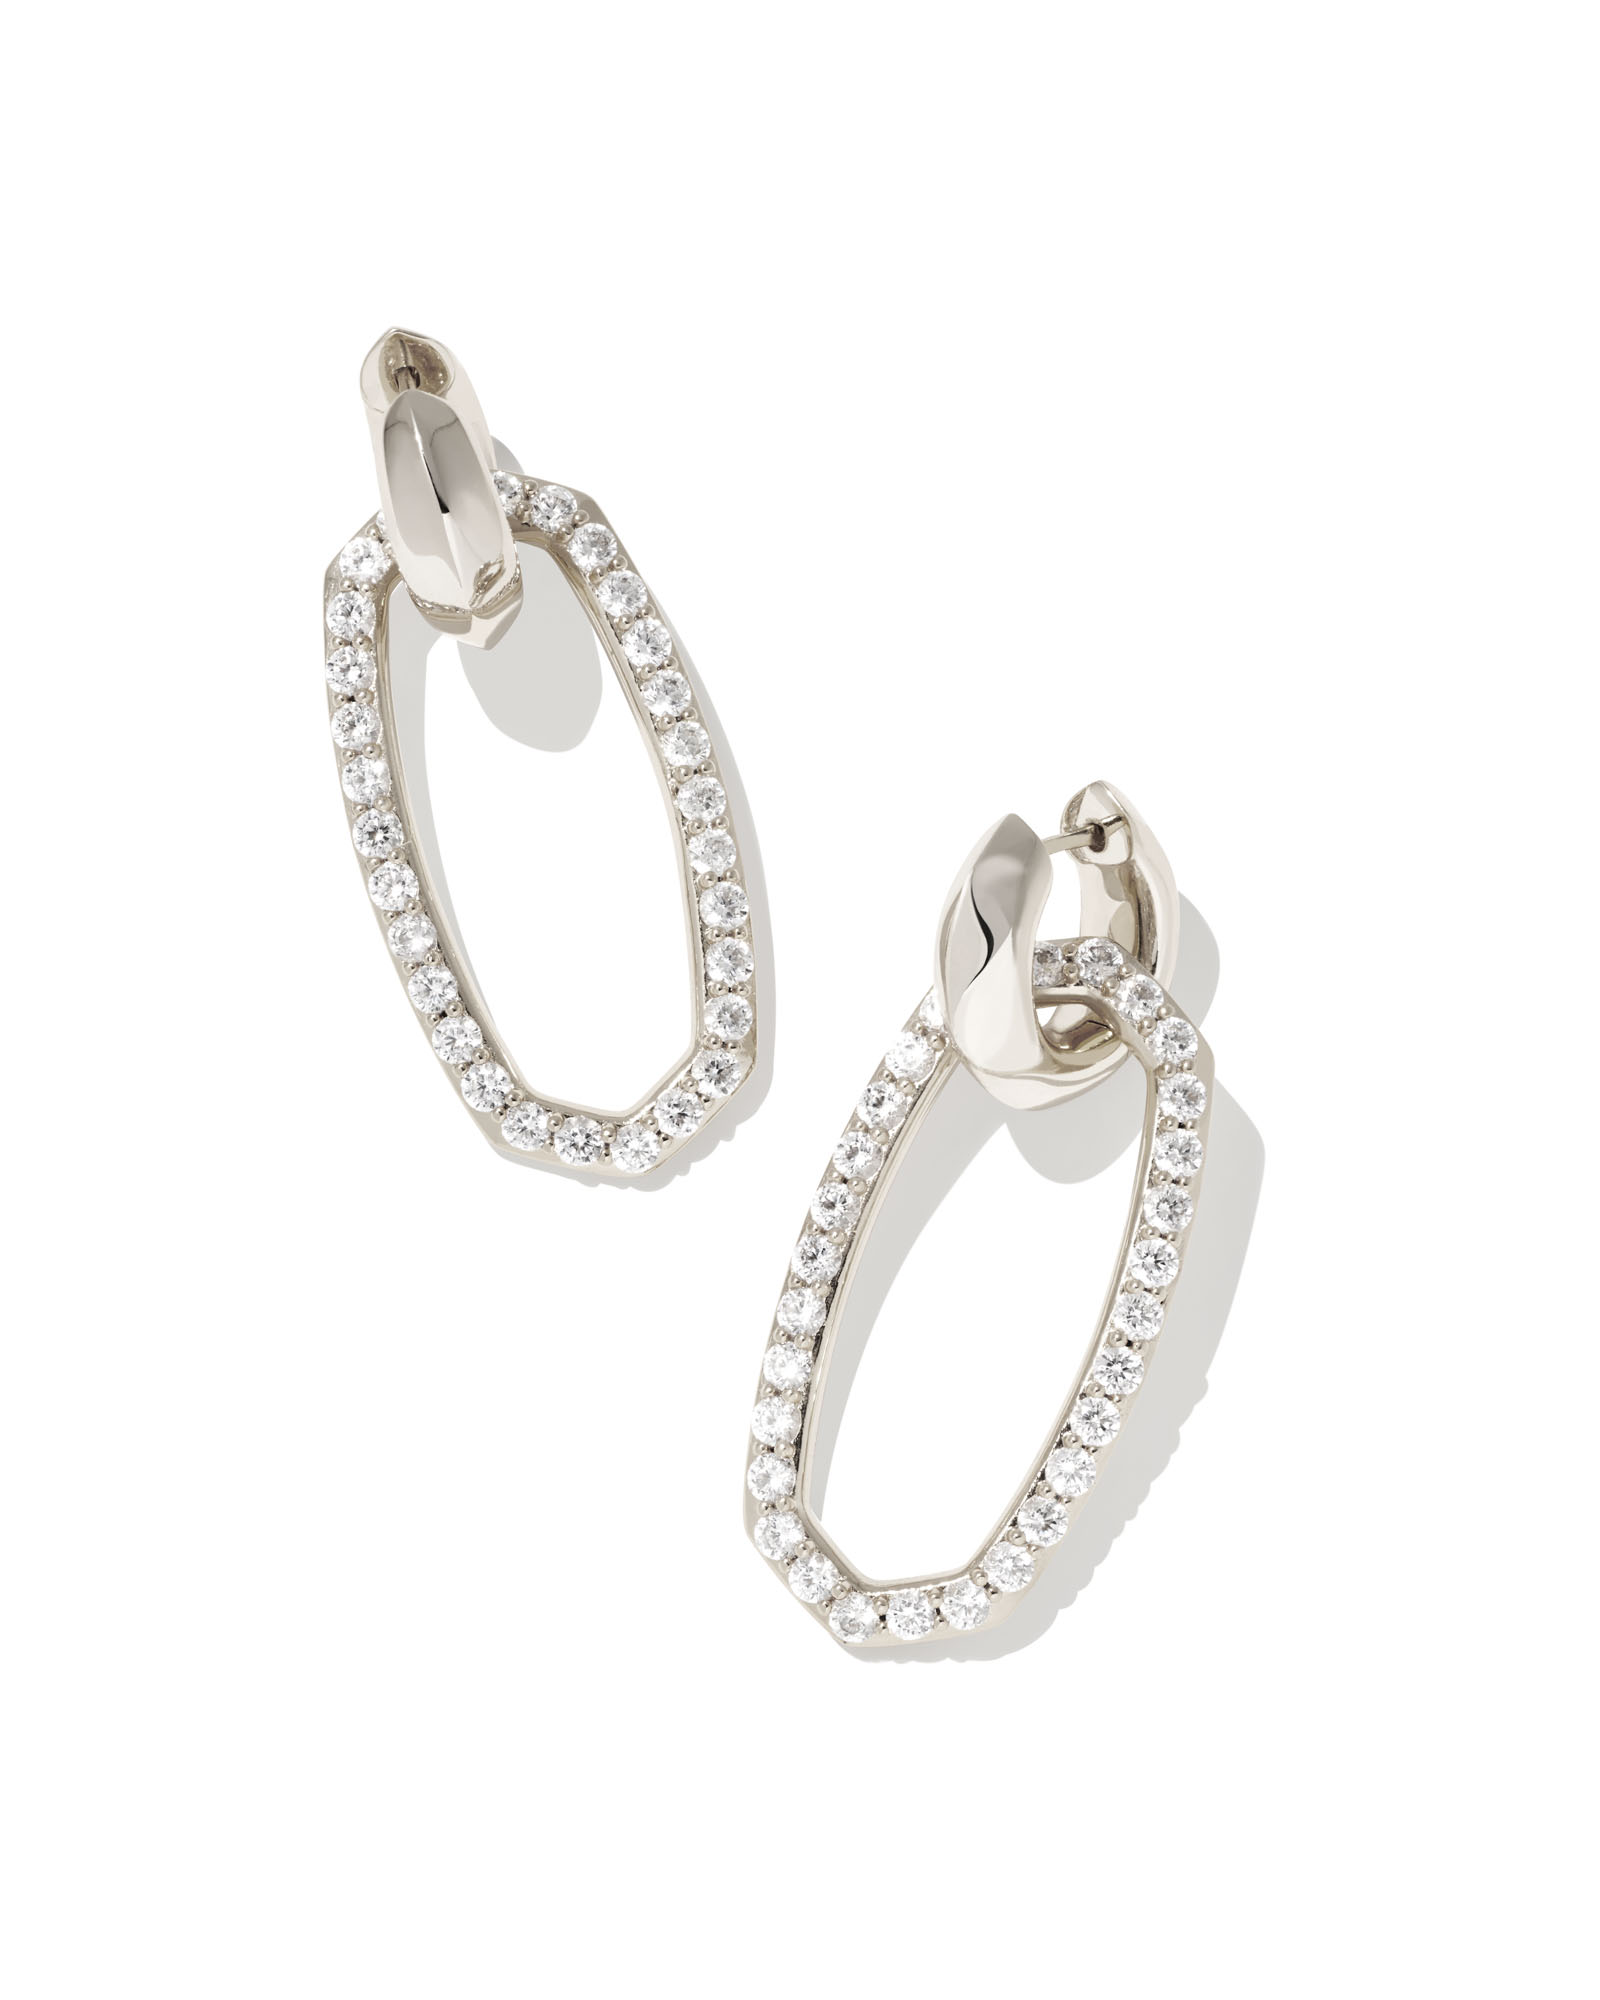 Danielle Silver Convertible Link Earrings in White Crystal | Kendra Scott